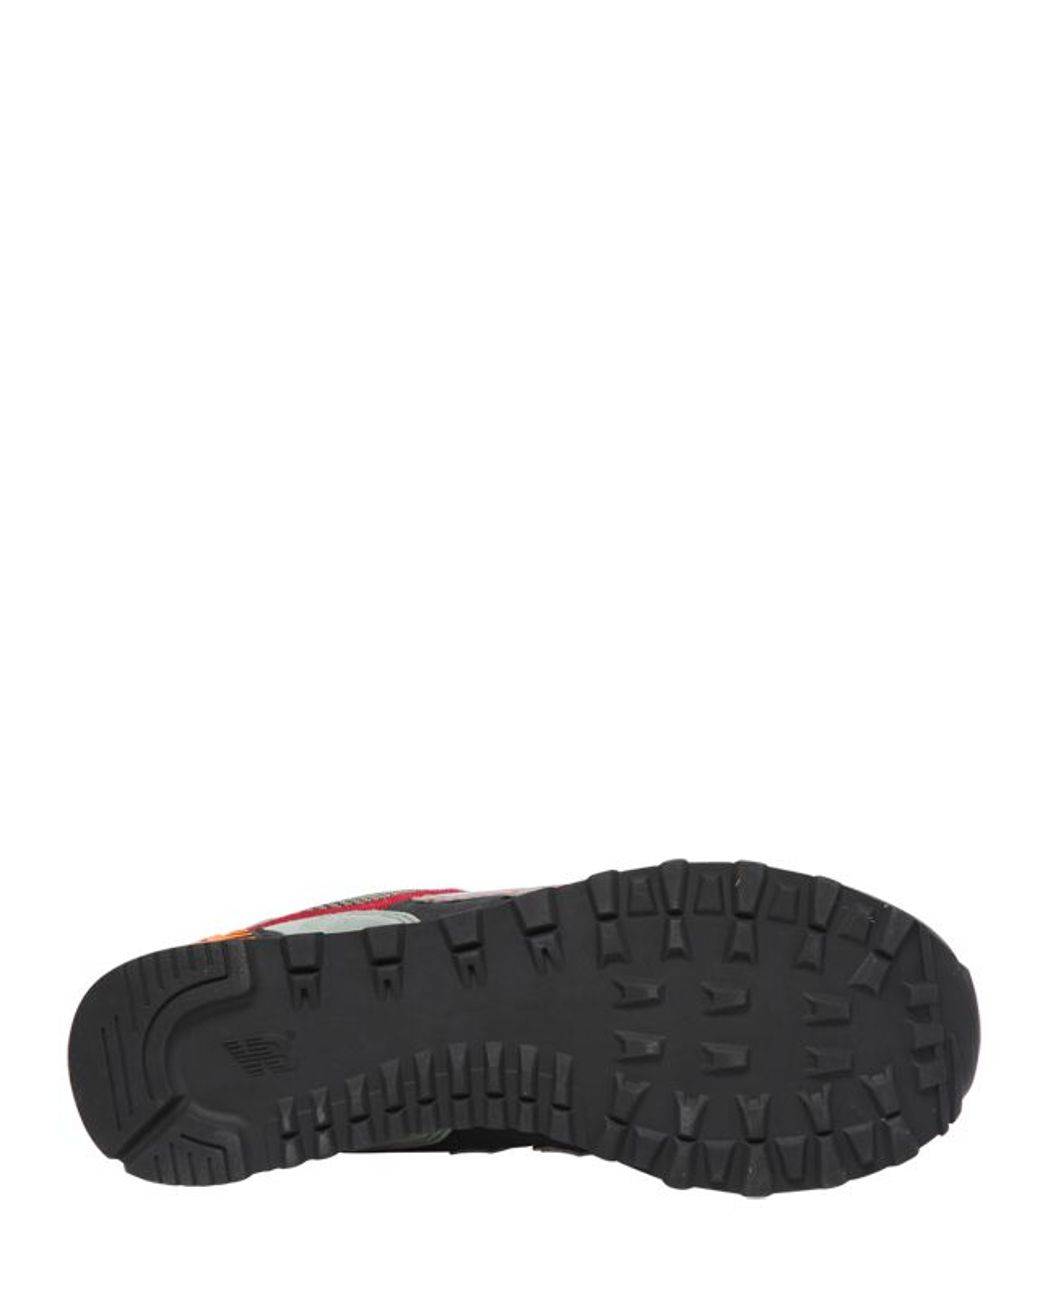 New Balance 574 Suede & Cordura Sneakers | Lyst